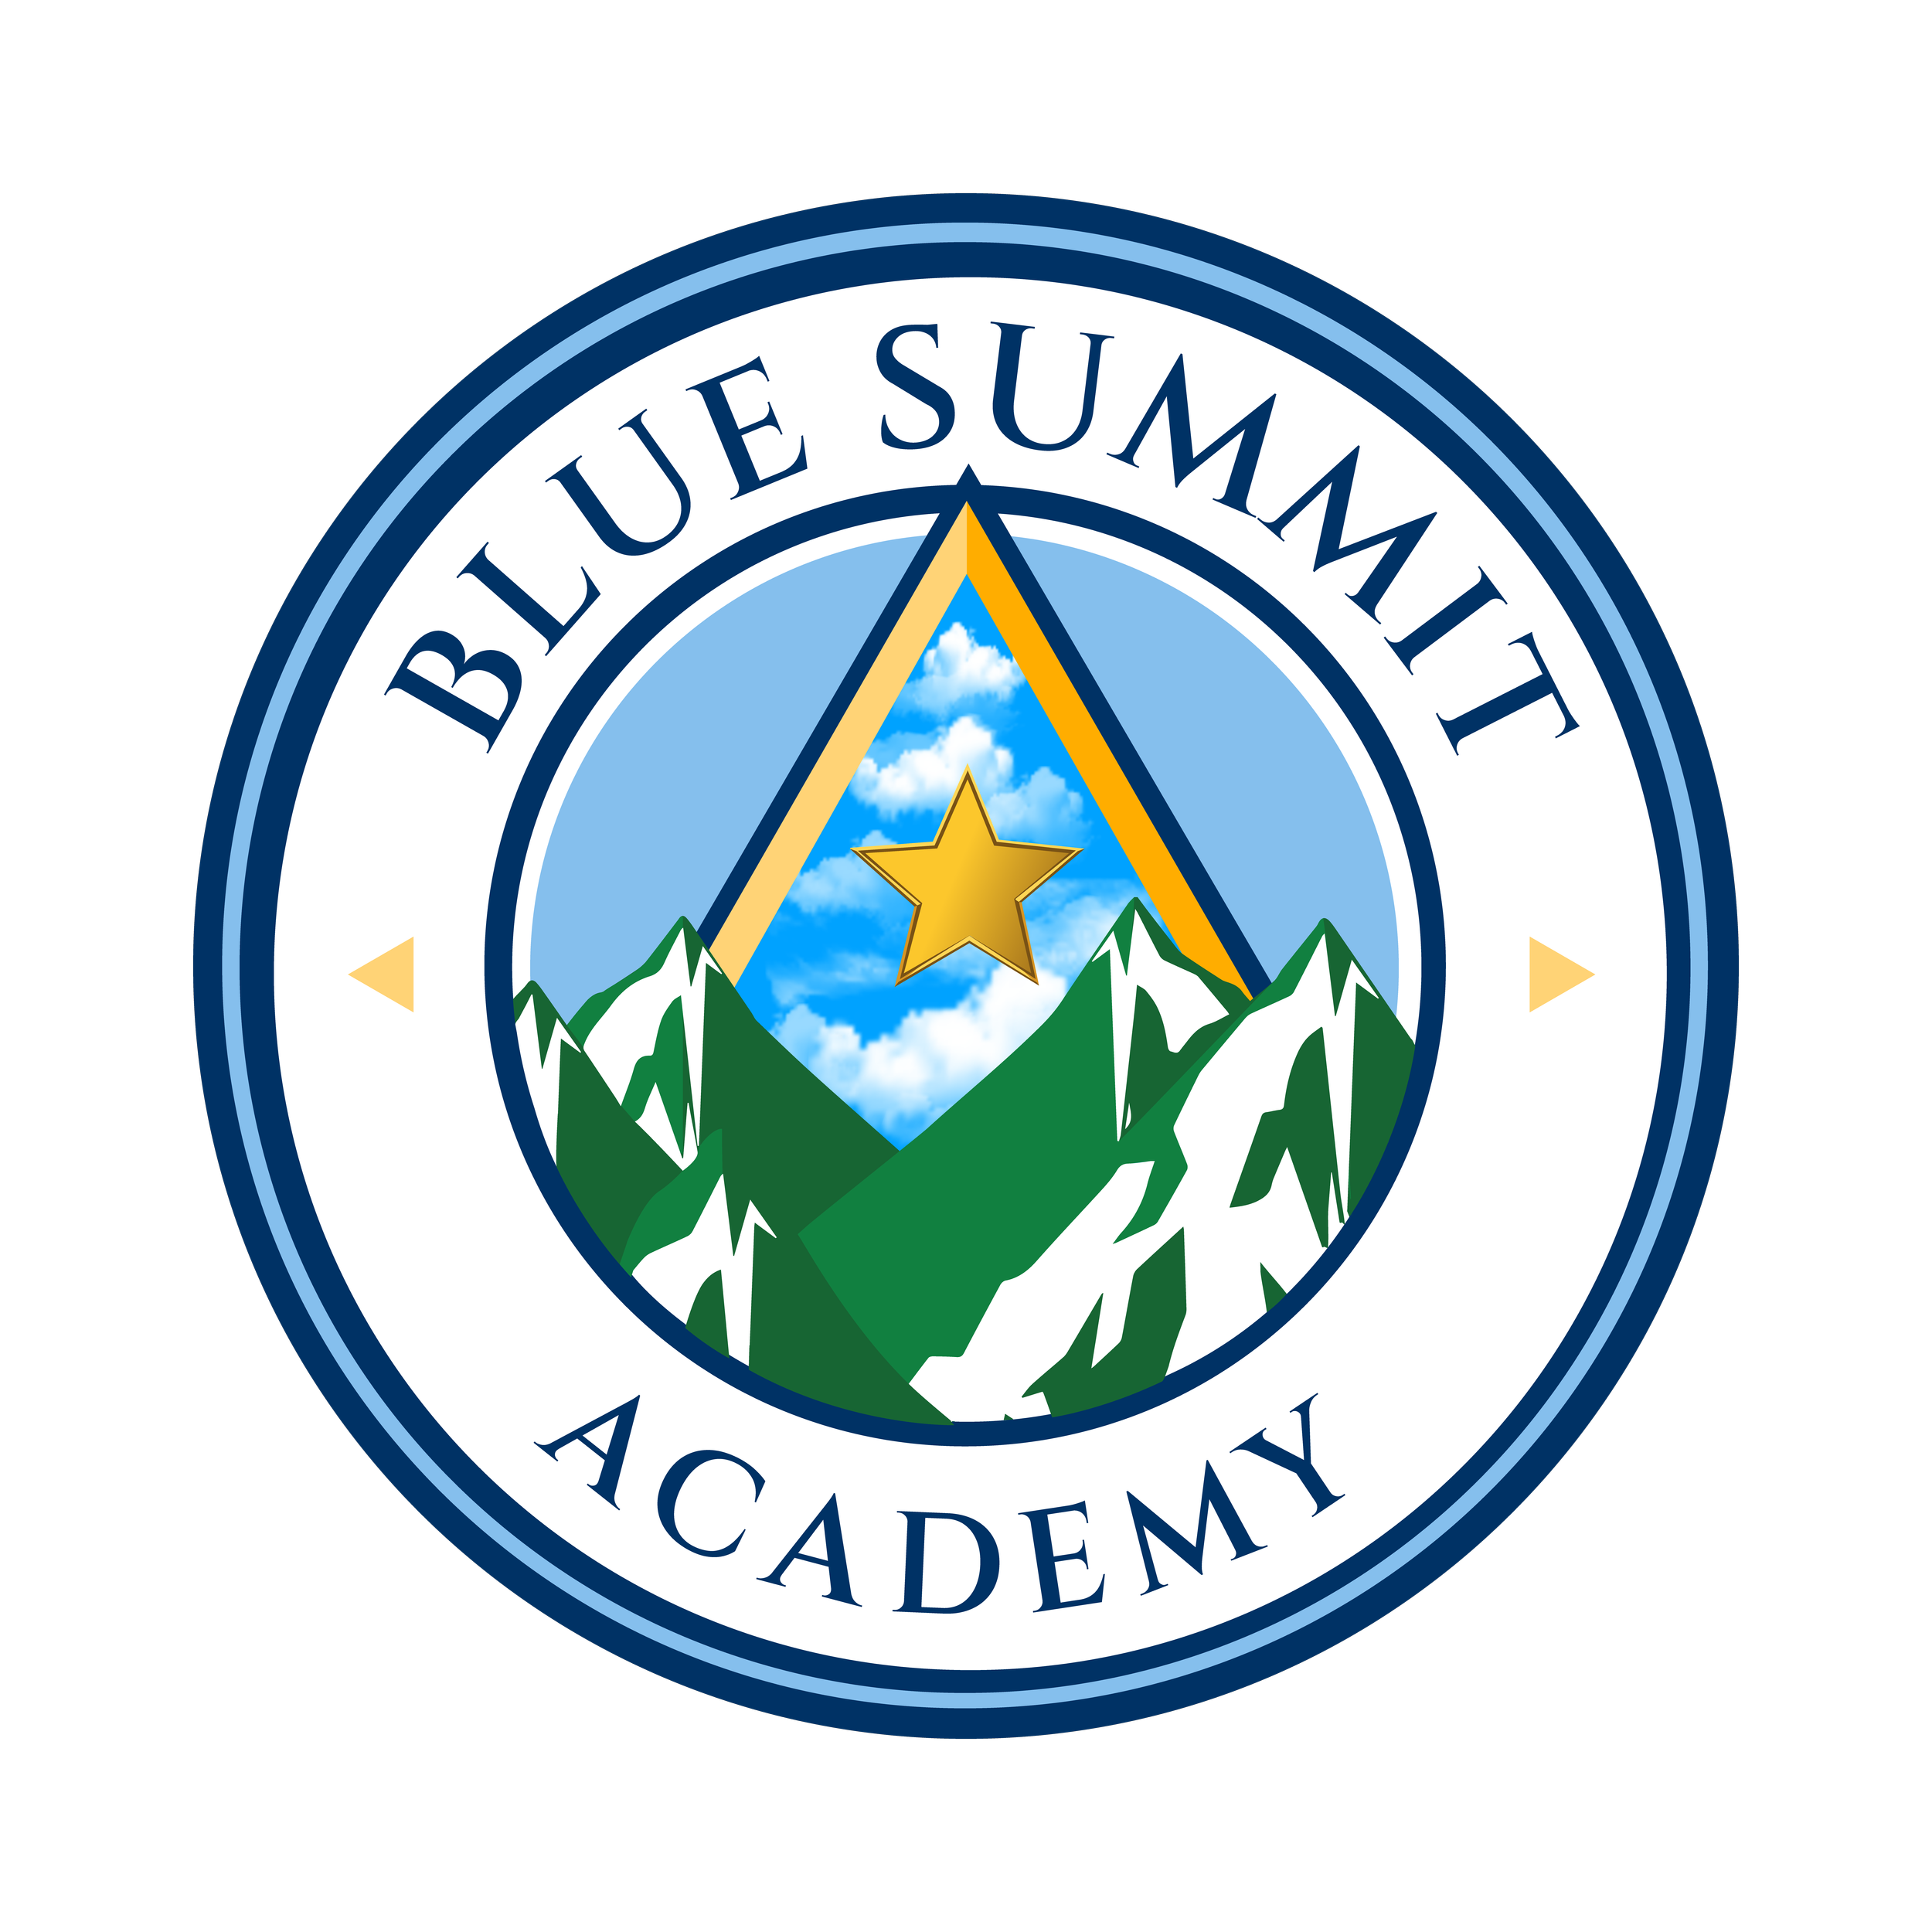 The Blue Summit Academy